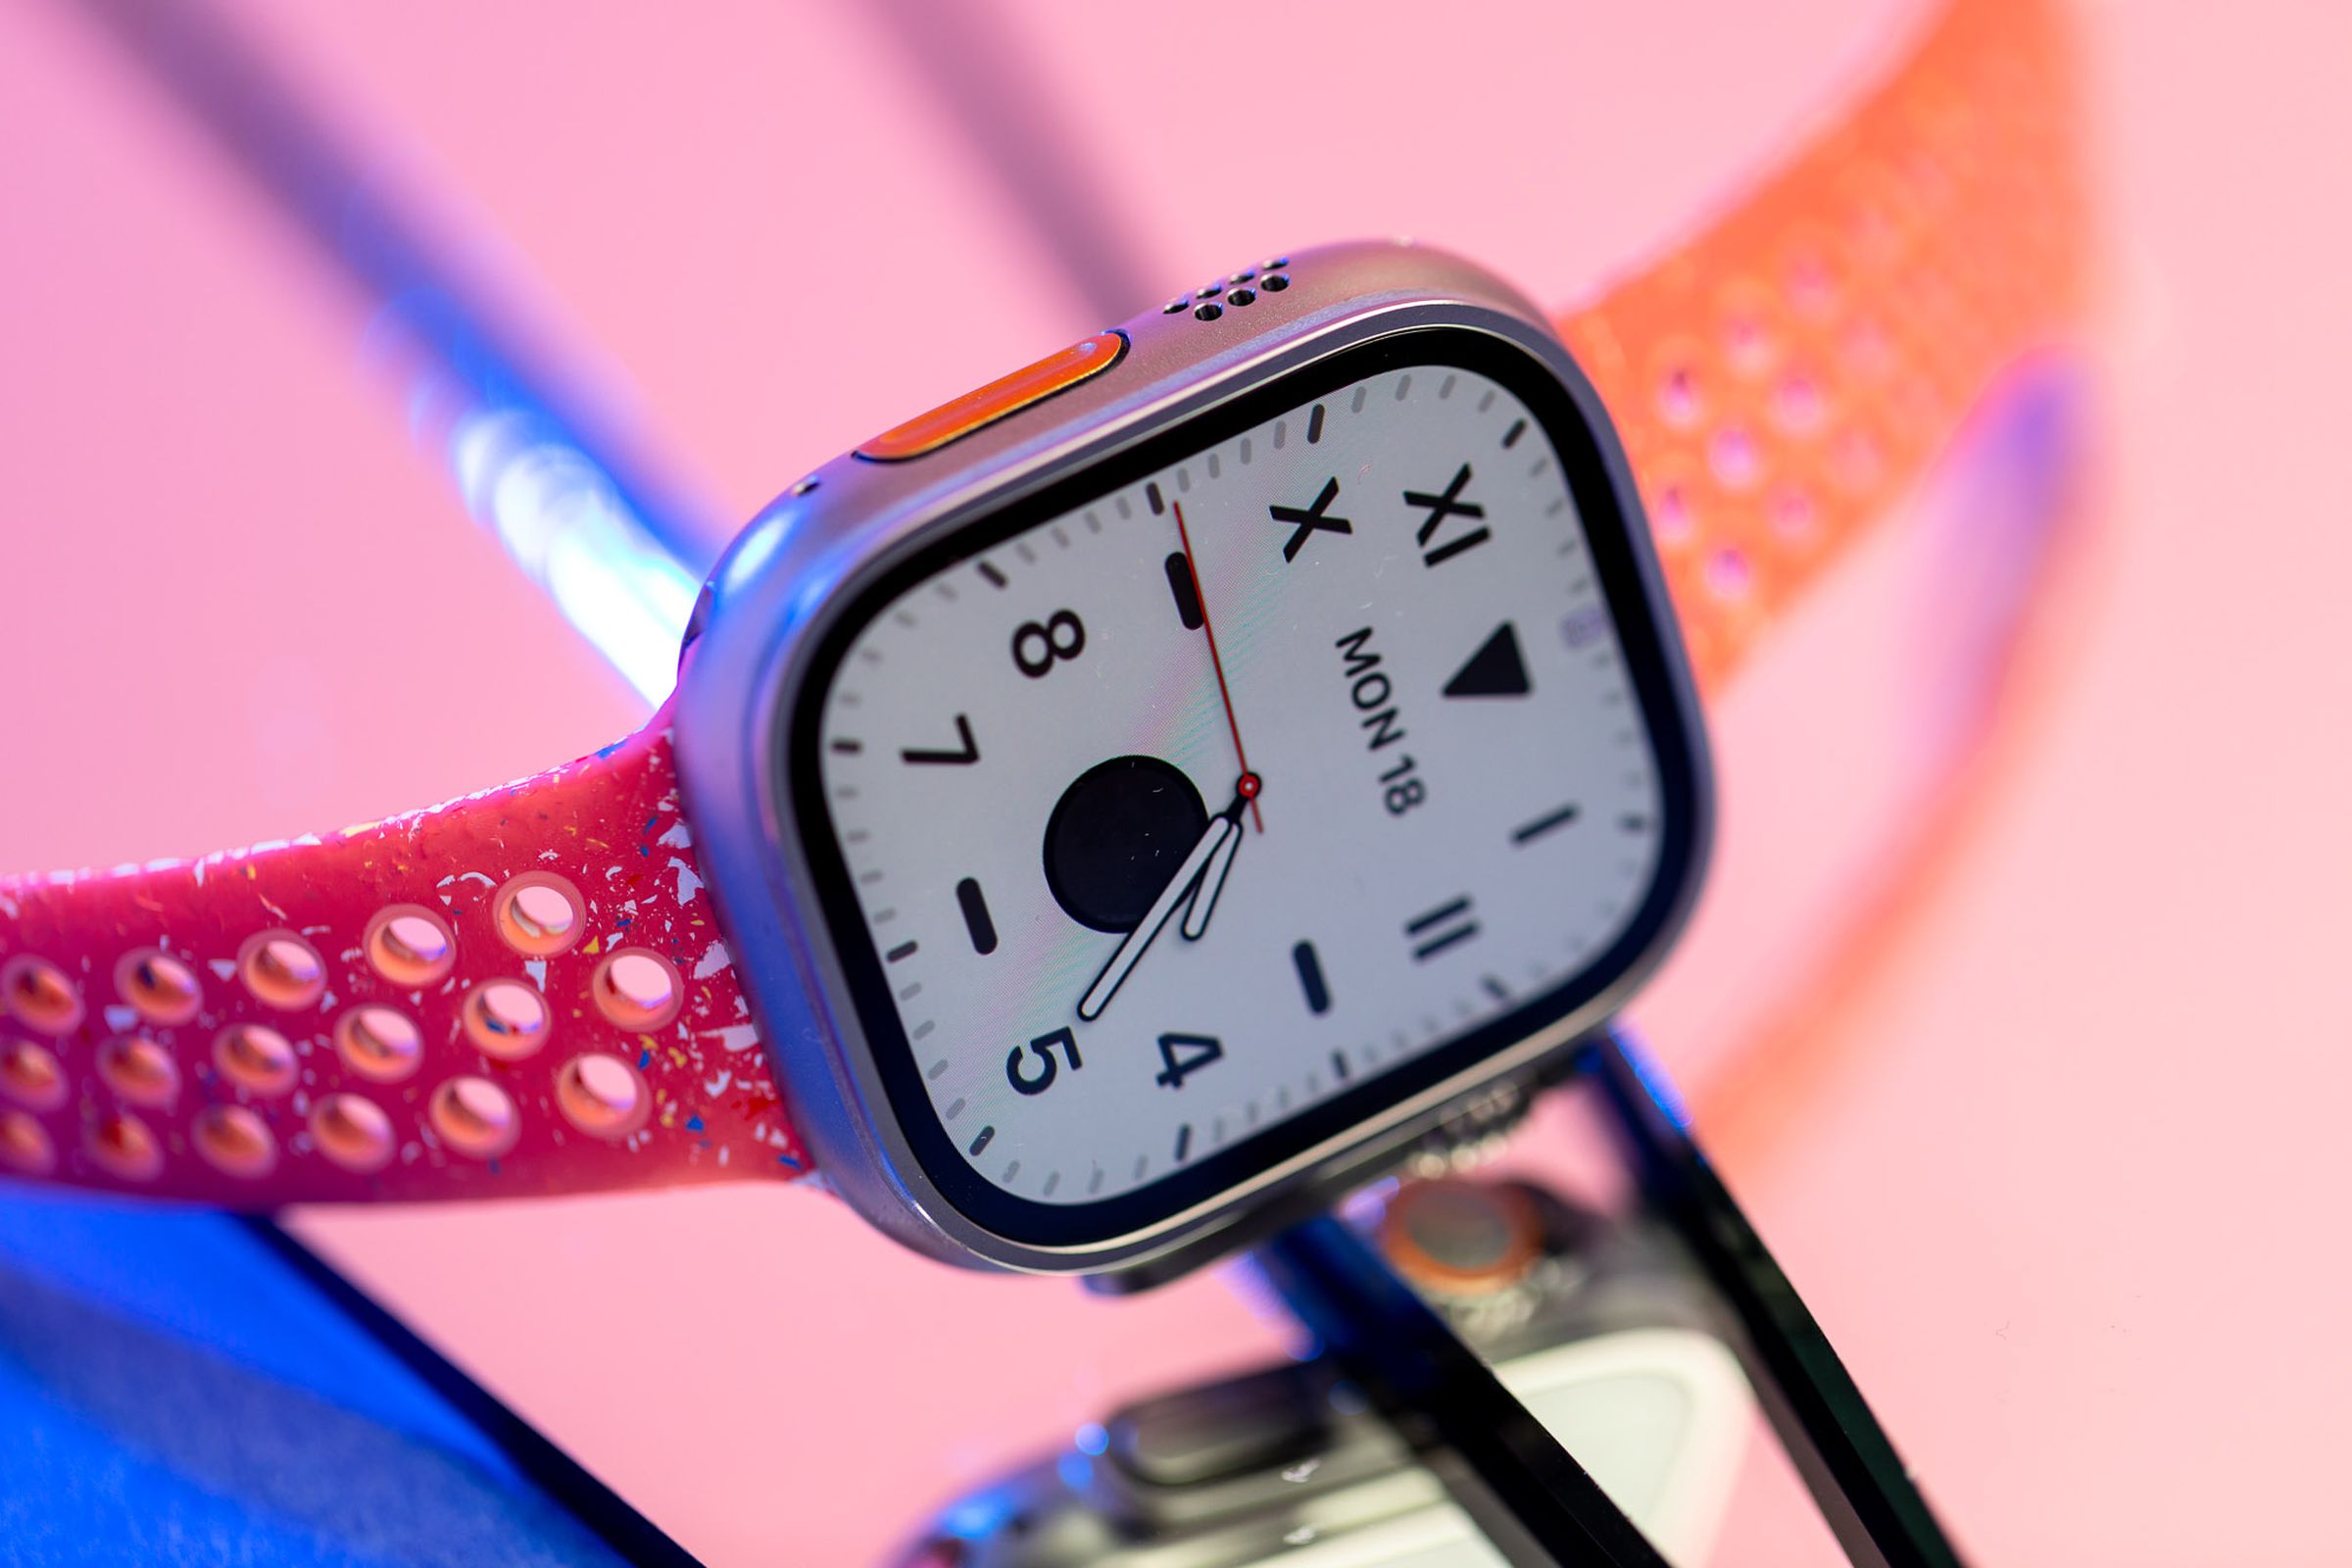 Apple Watch Ultra 2 on a reflecive pink surface